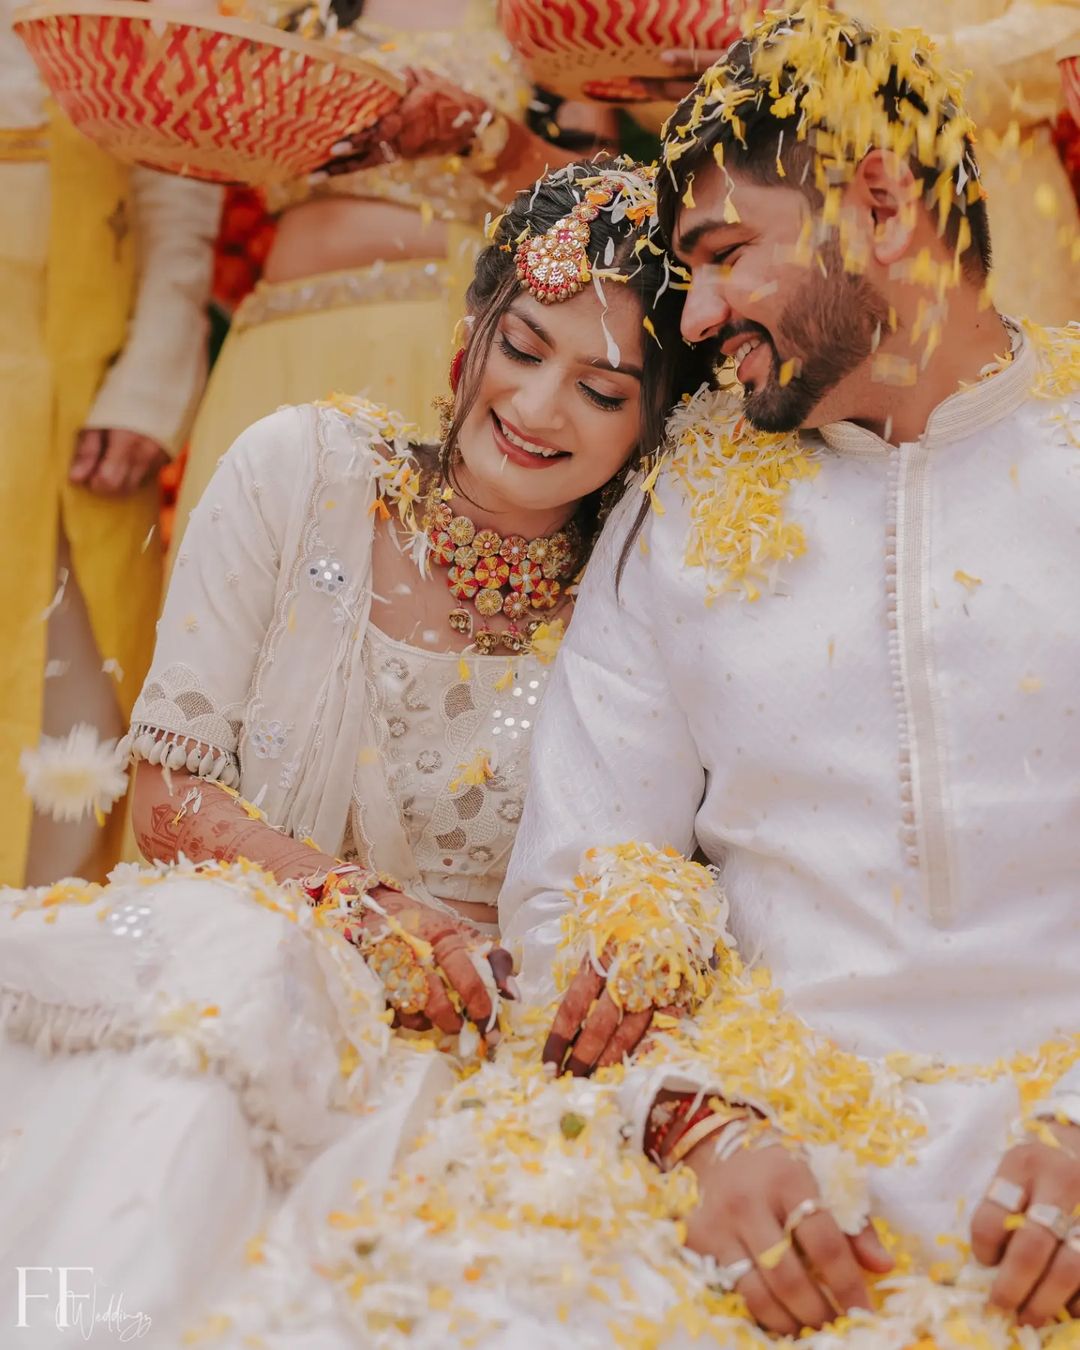 Haldi photoshoot poses for bride and groom- haldi pics of bride and groom